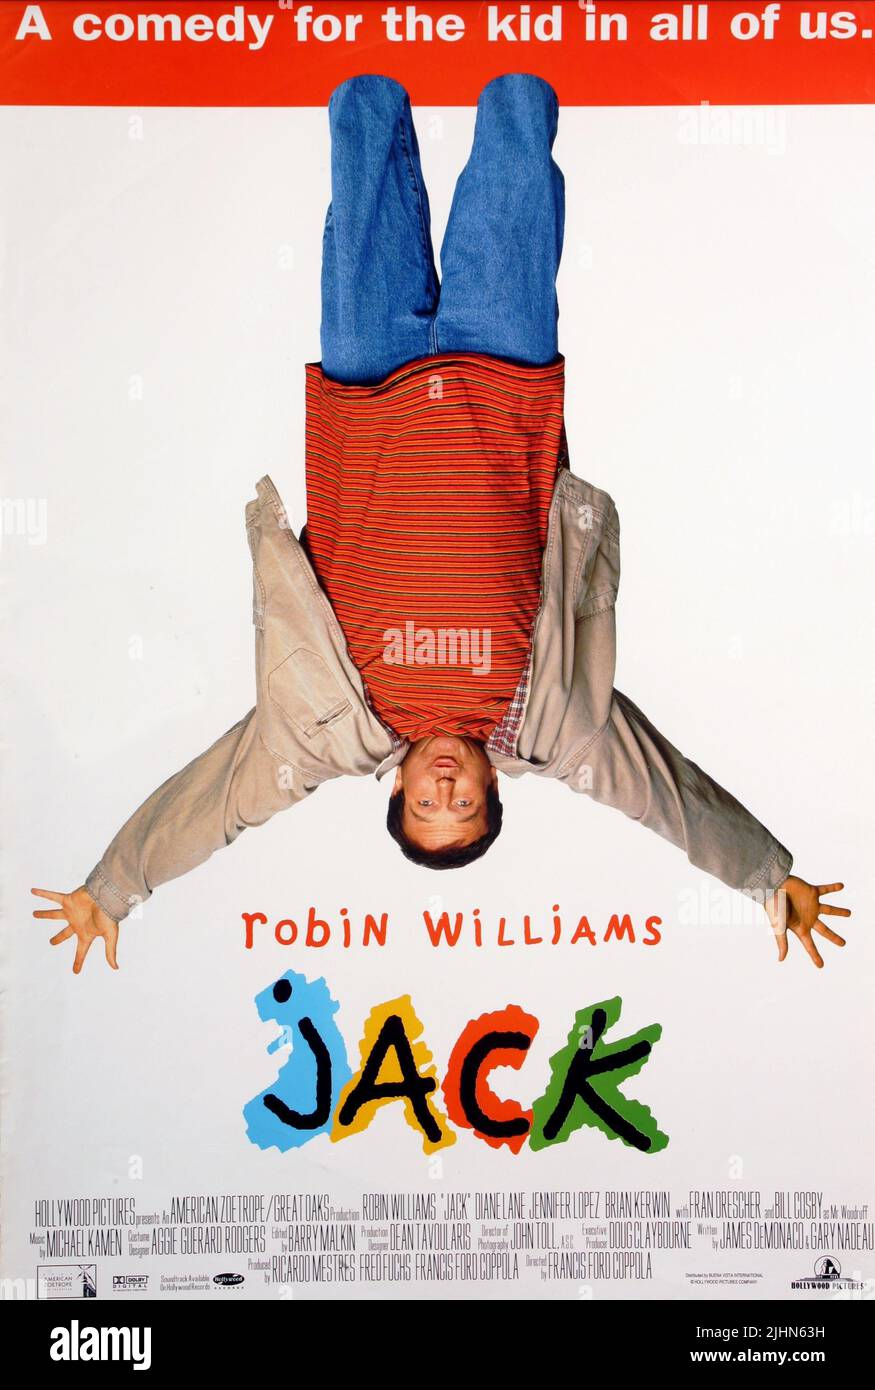 JACK-1996 ROBIN WILLIAMS Stockfotografie - Alamy